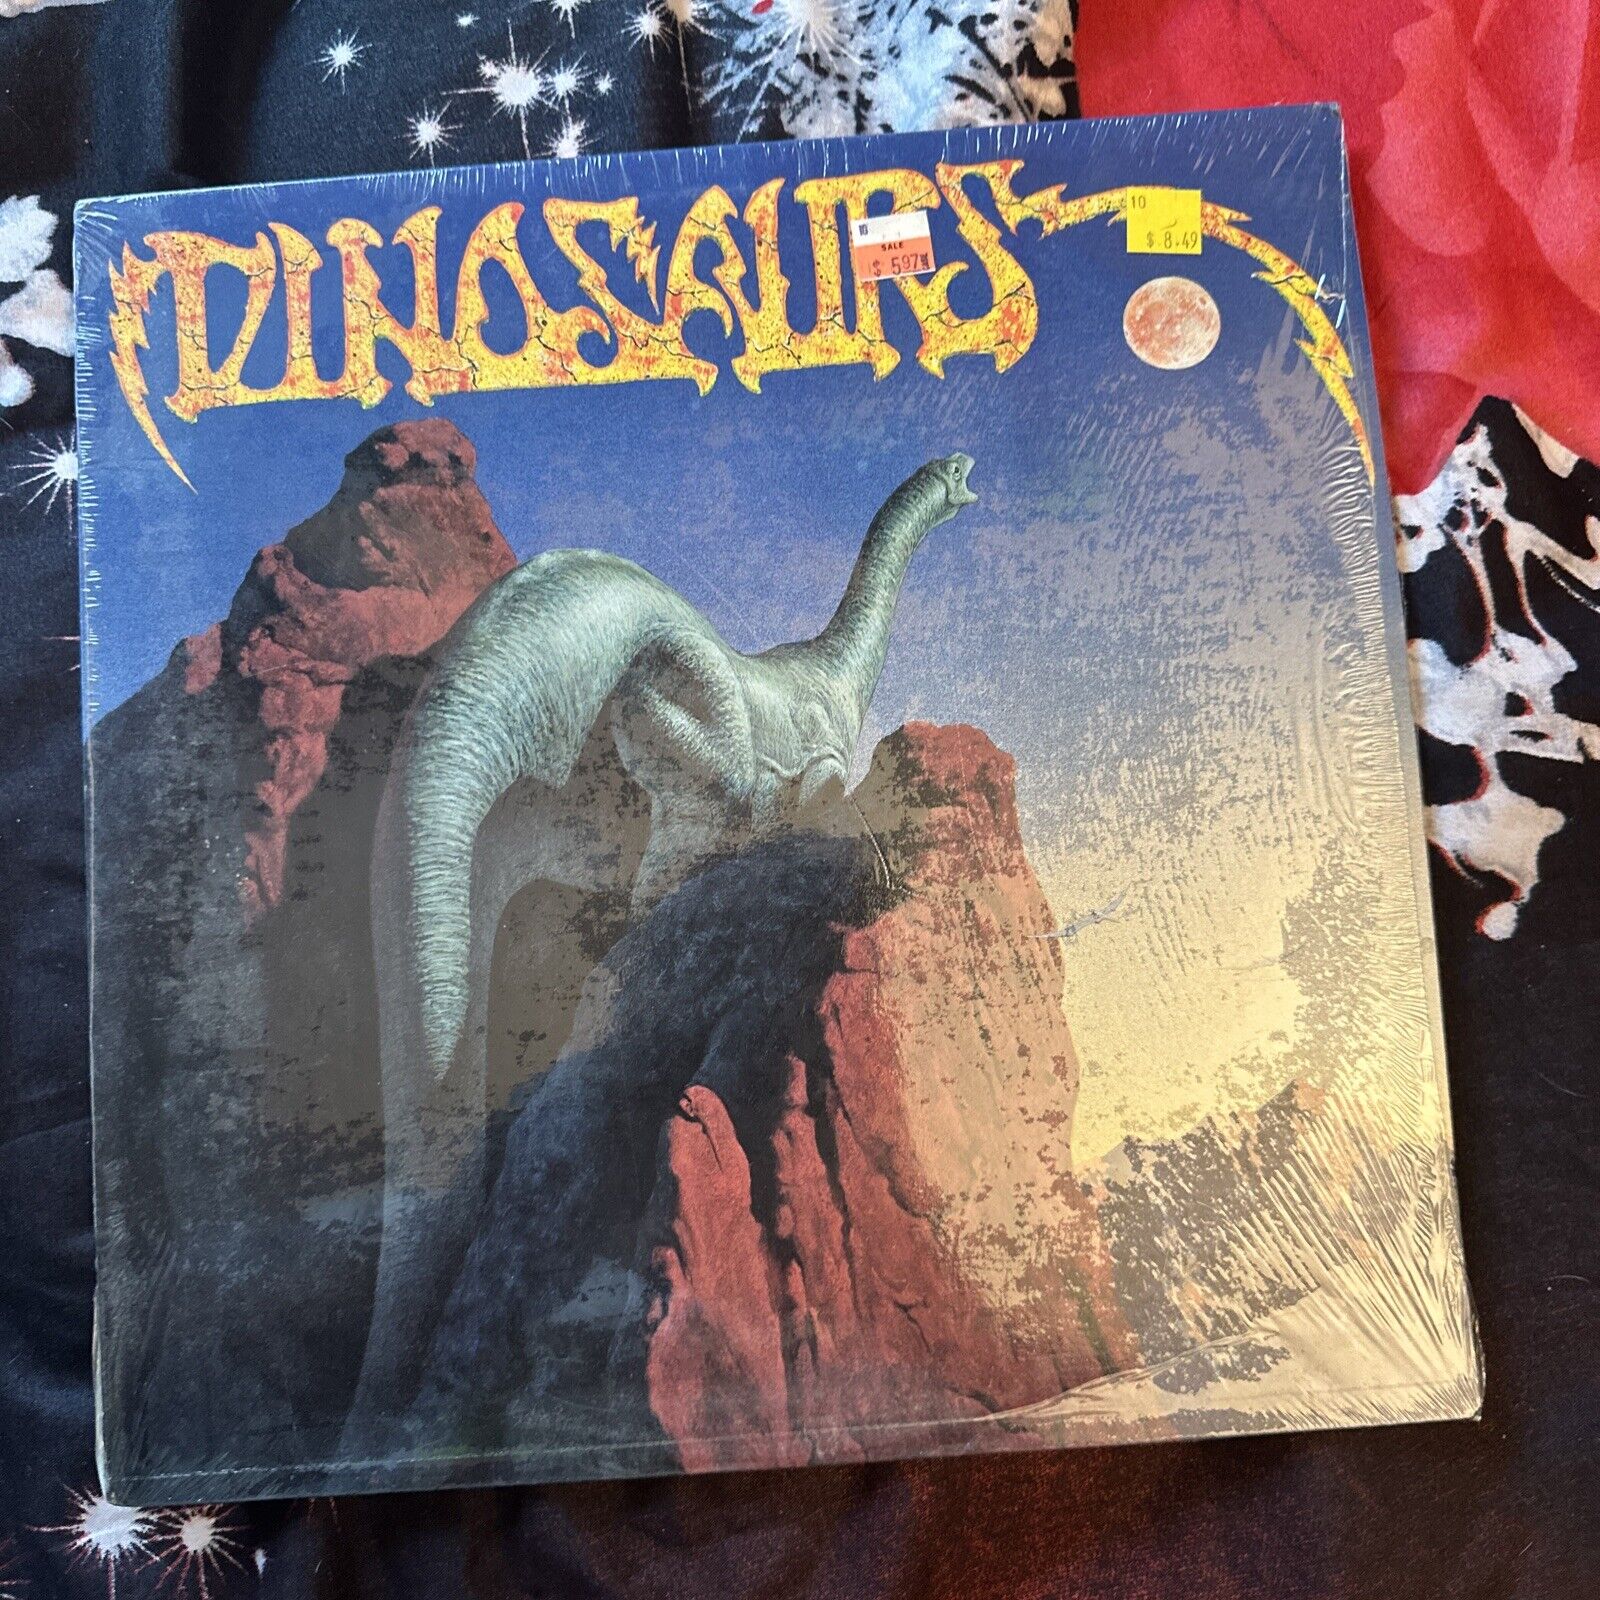 Dinosaurs, Self titled Vinyl LP, RRLP 2031, 1988, FACTORY SEALED